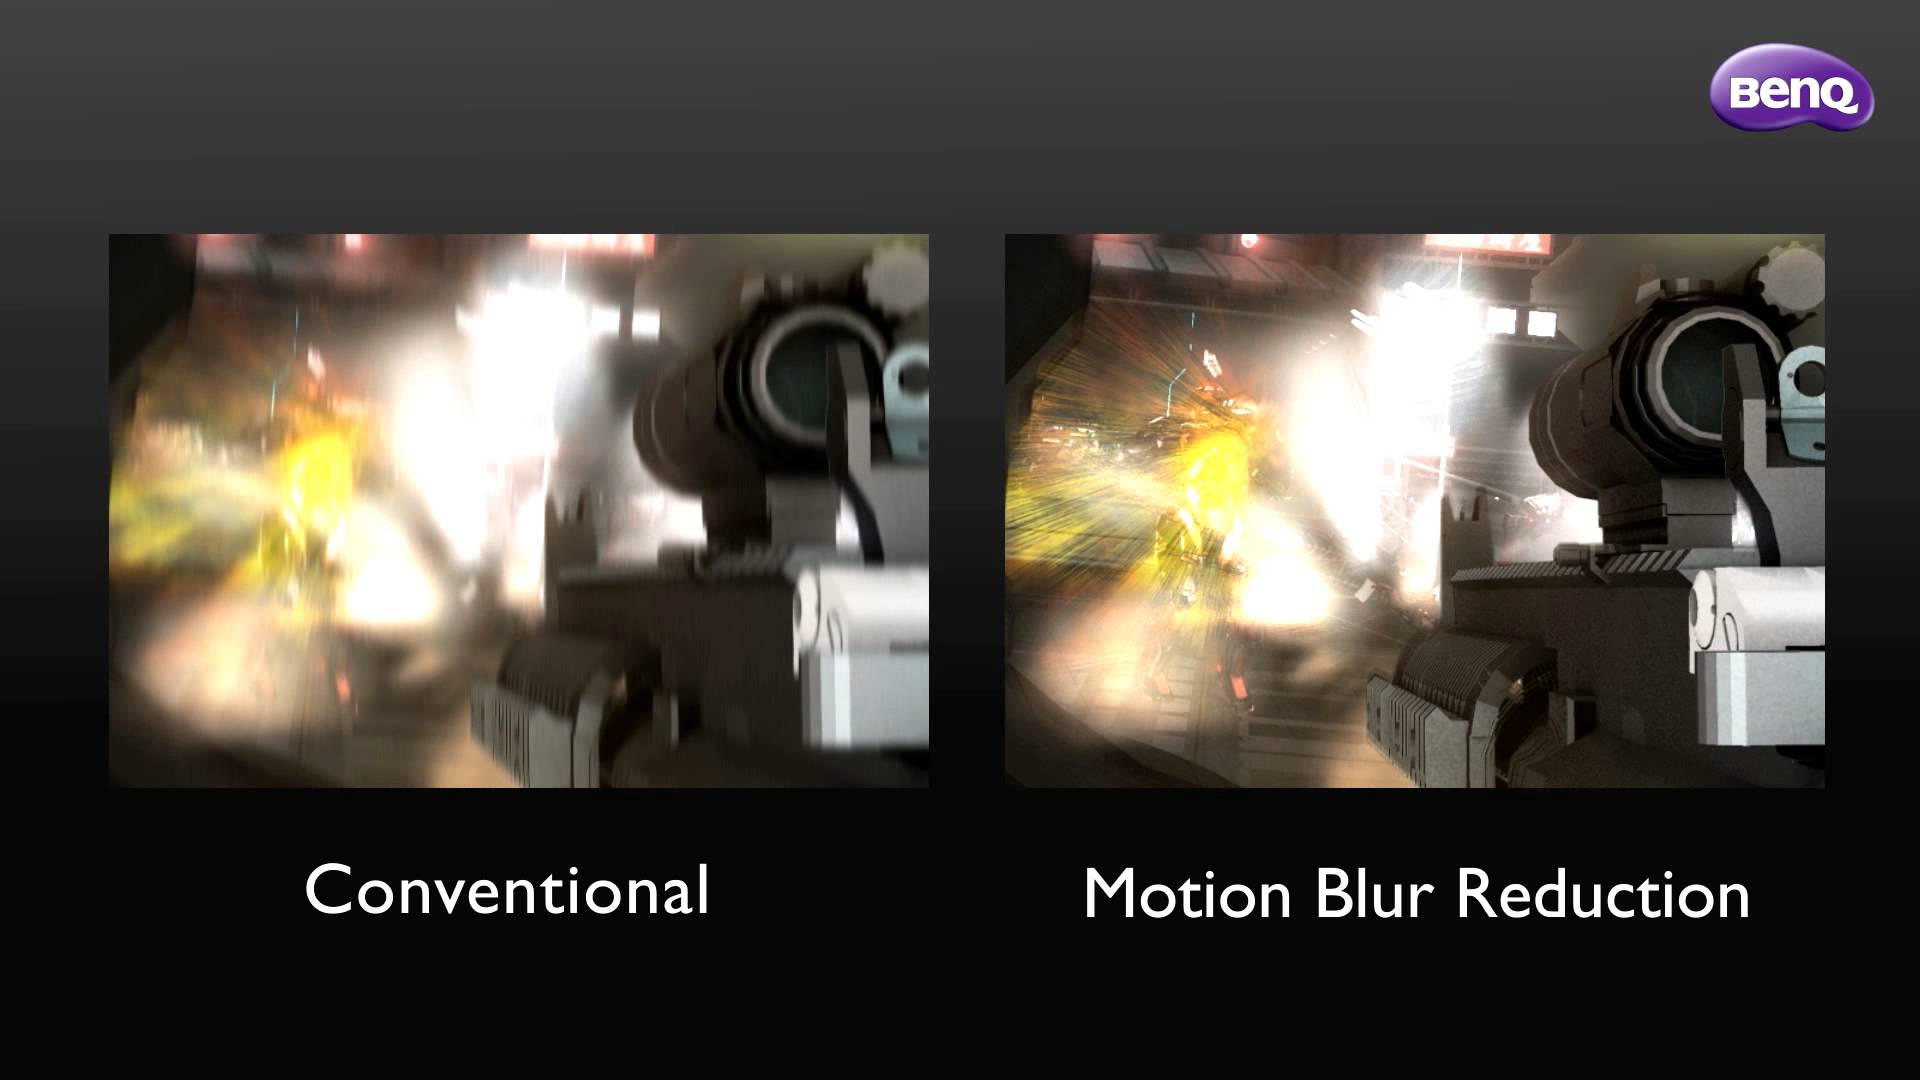 Vergleich: Normaler Monitor vs. Motion-Blur Reduction Monitor